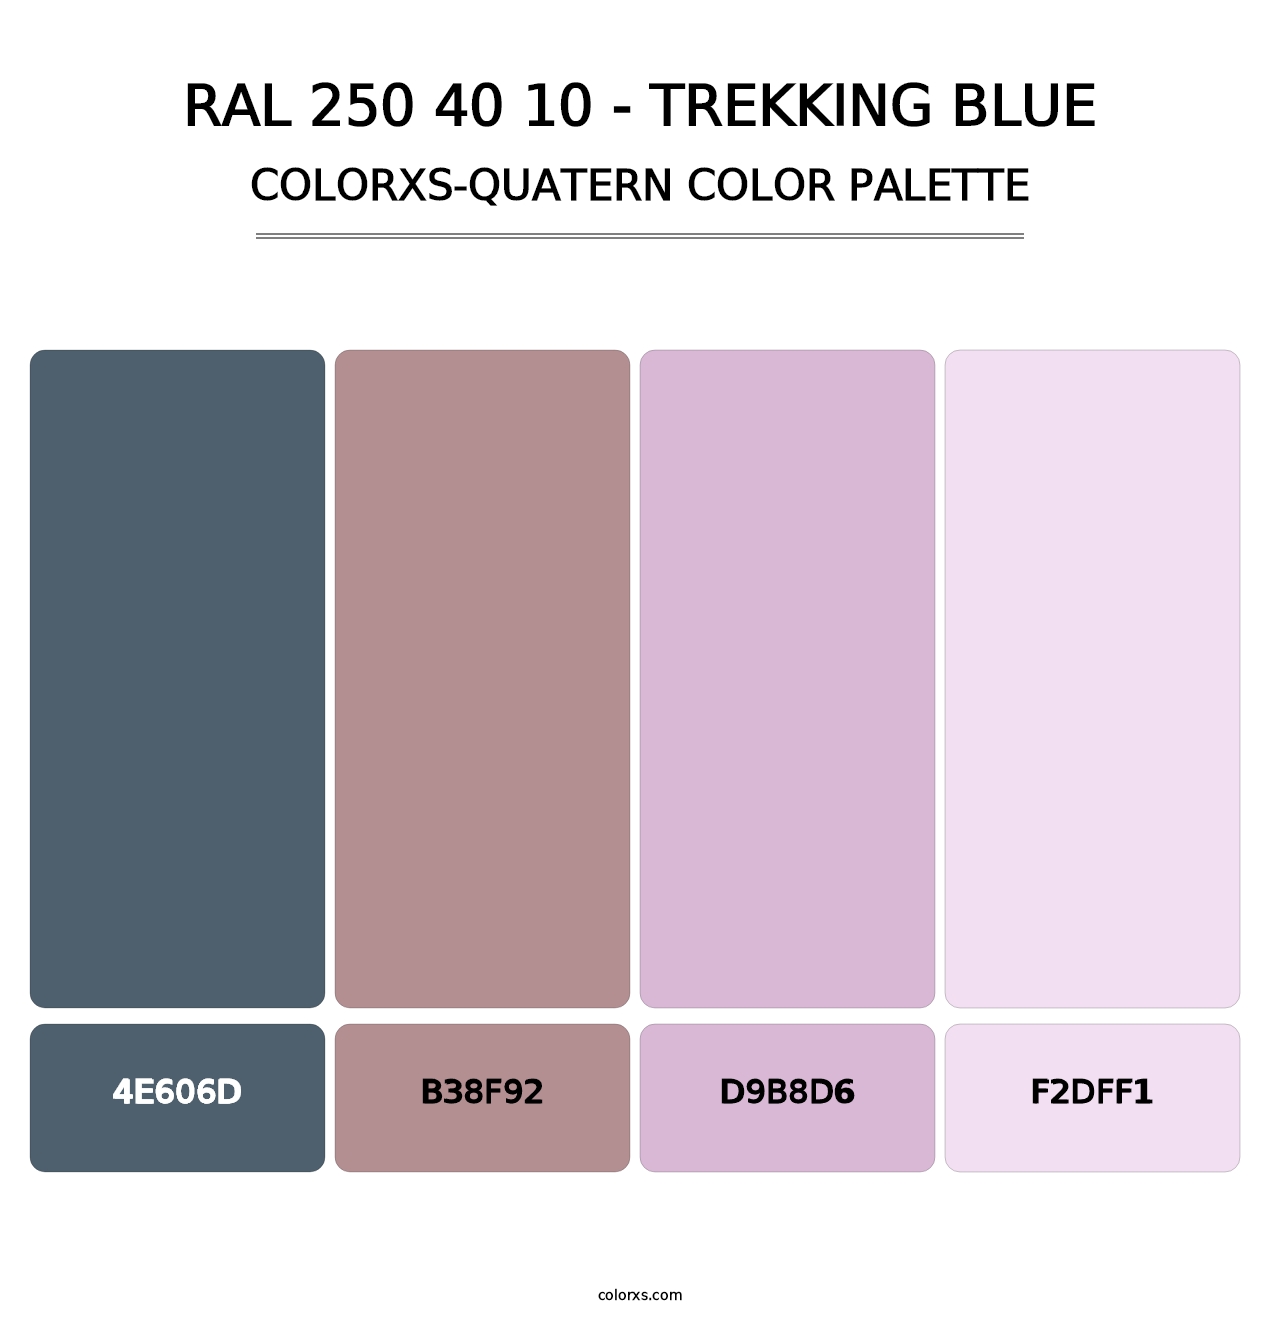 RAL 250 40 10 - Trekking Blue - Colorxs Quatern Palette